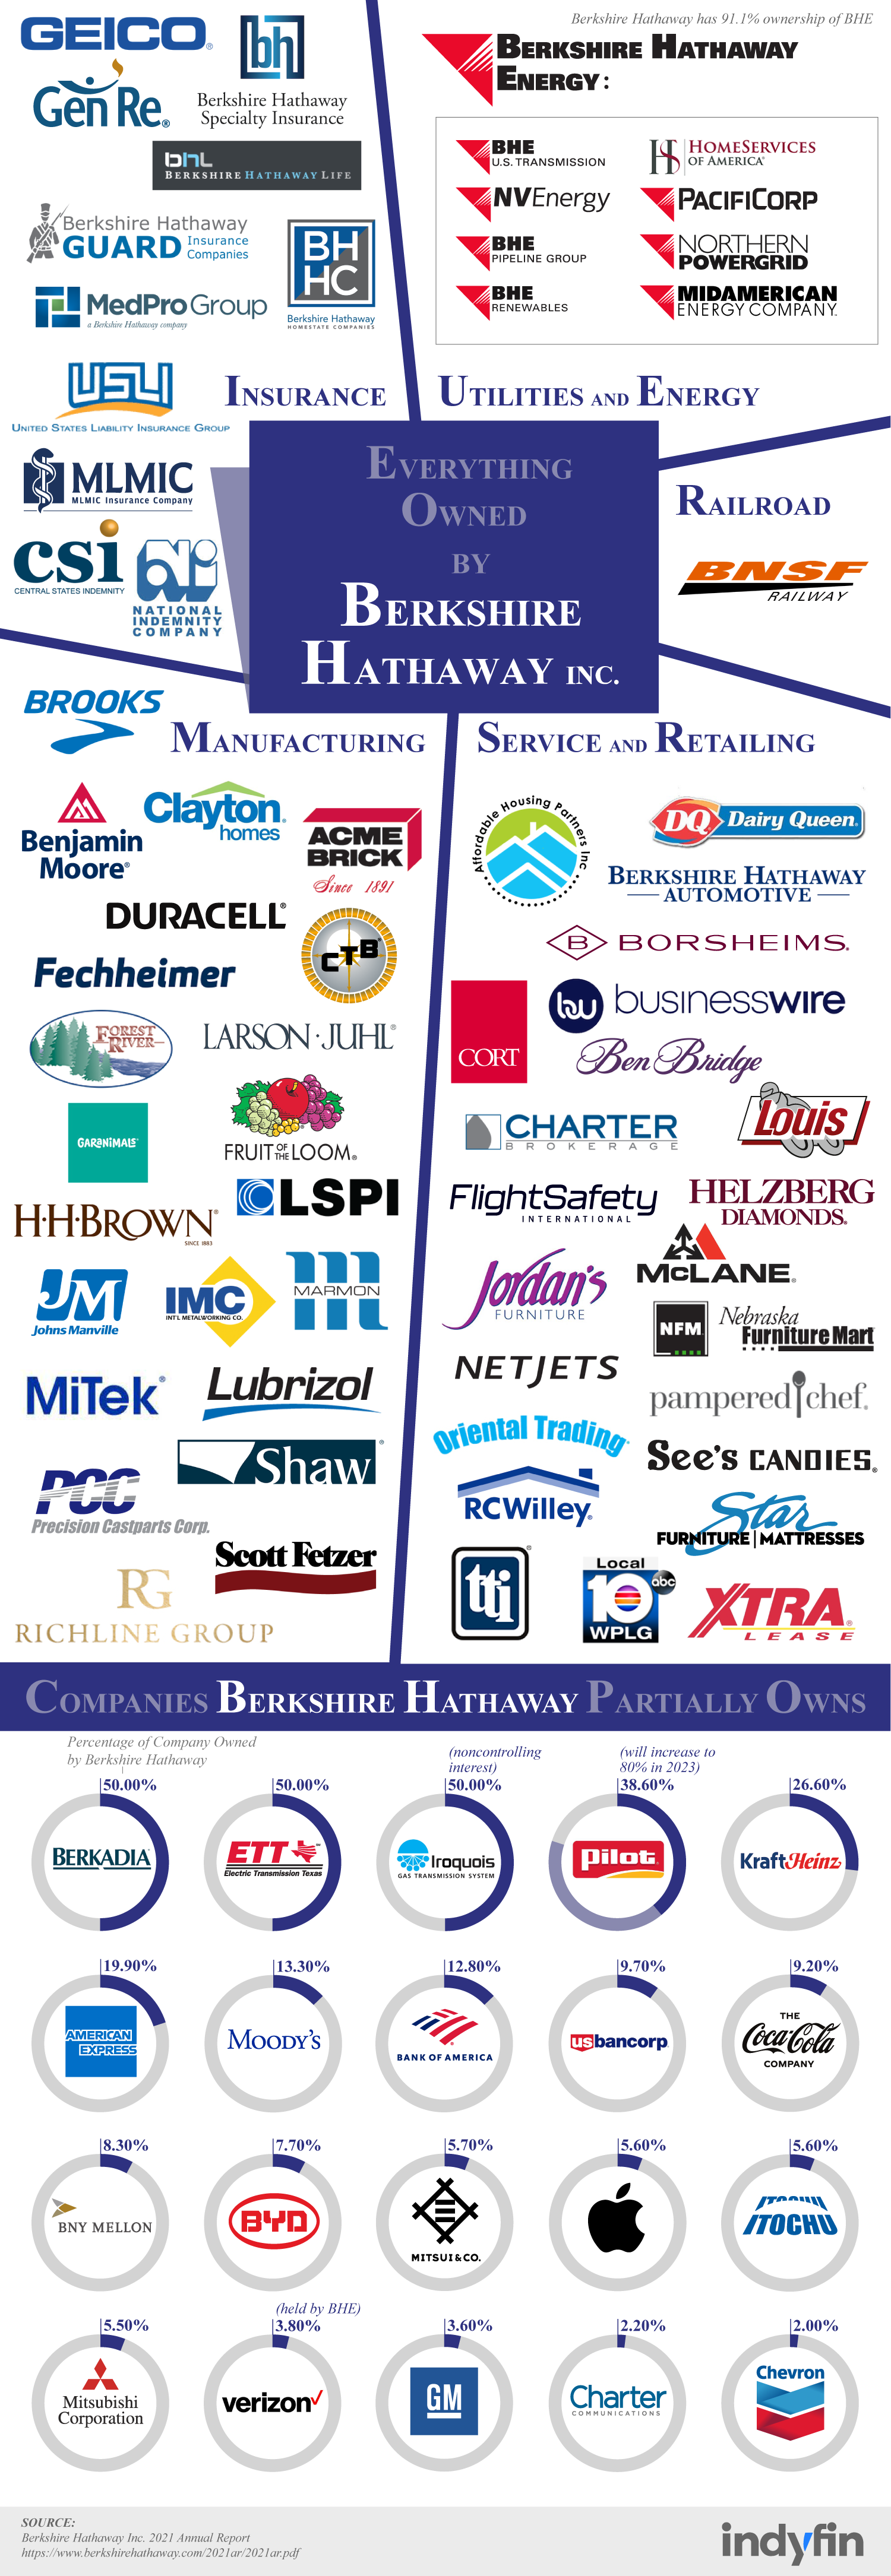 list-berkshire-hathaway-companies